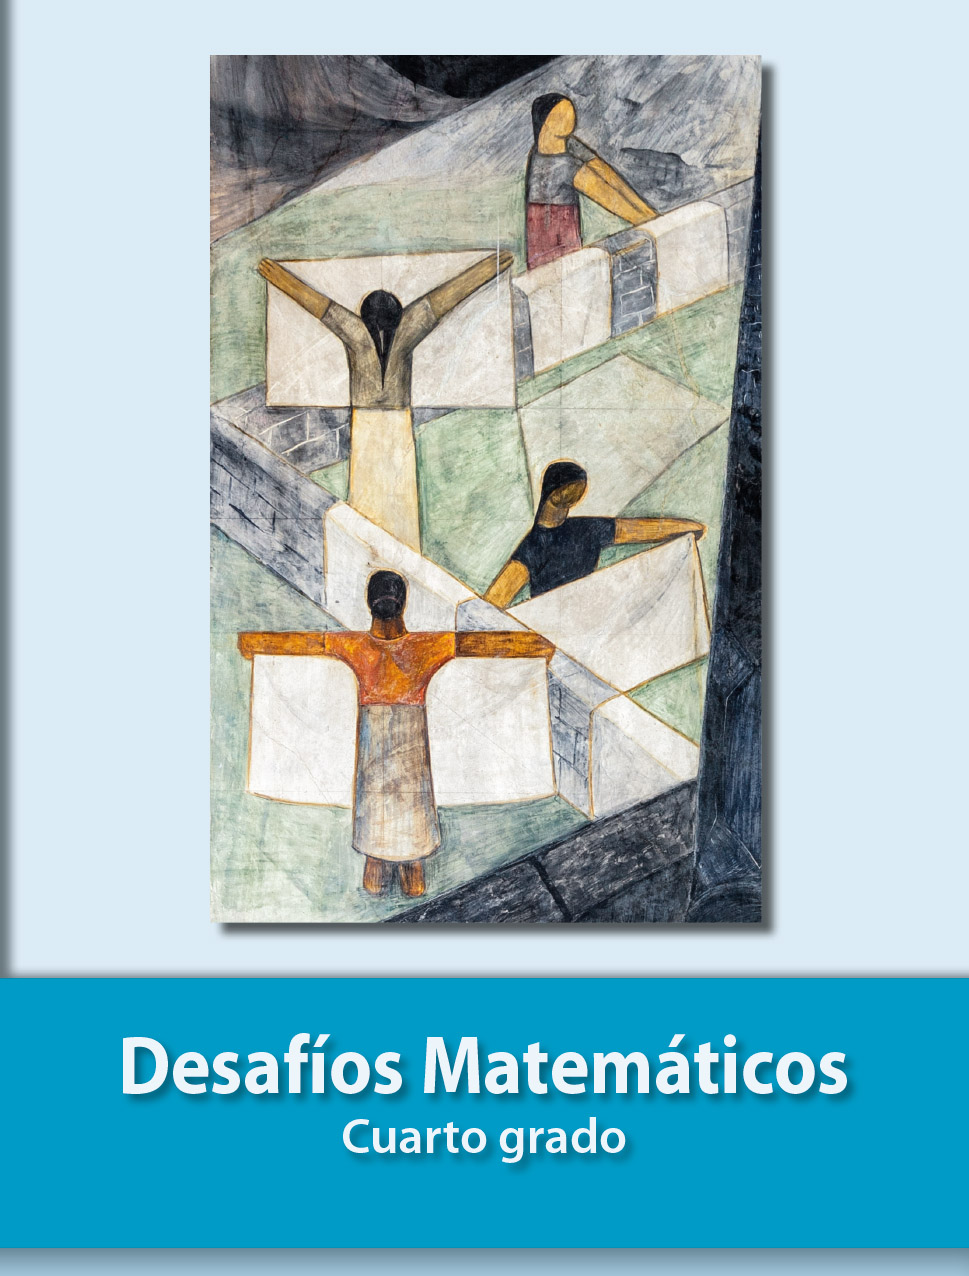 Desafíos Matemáticos Cuarto grado 2020-2021 - Libros de ...